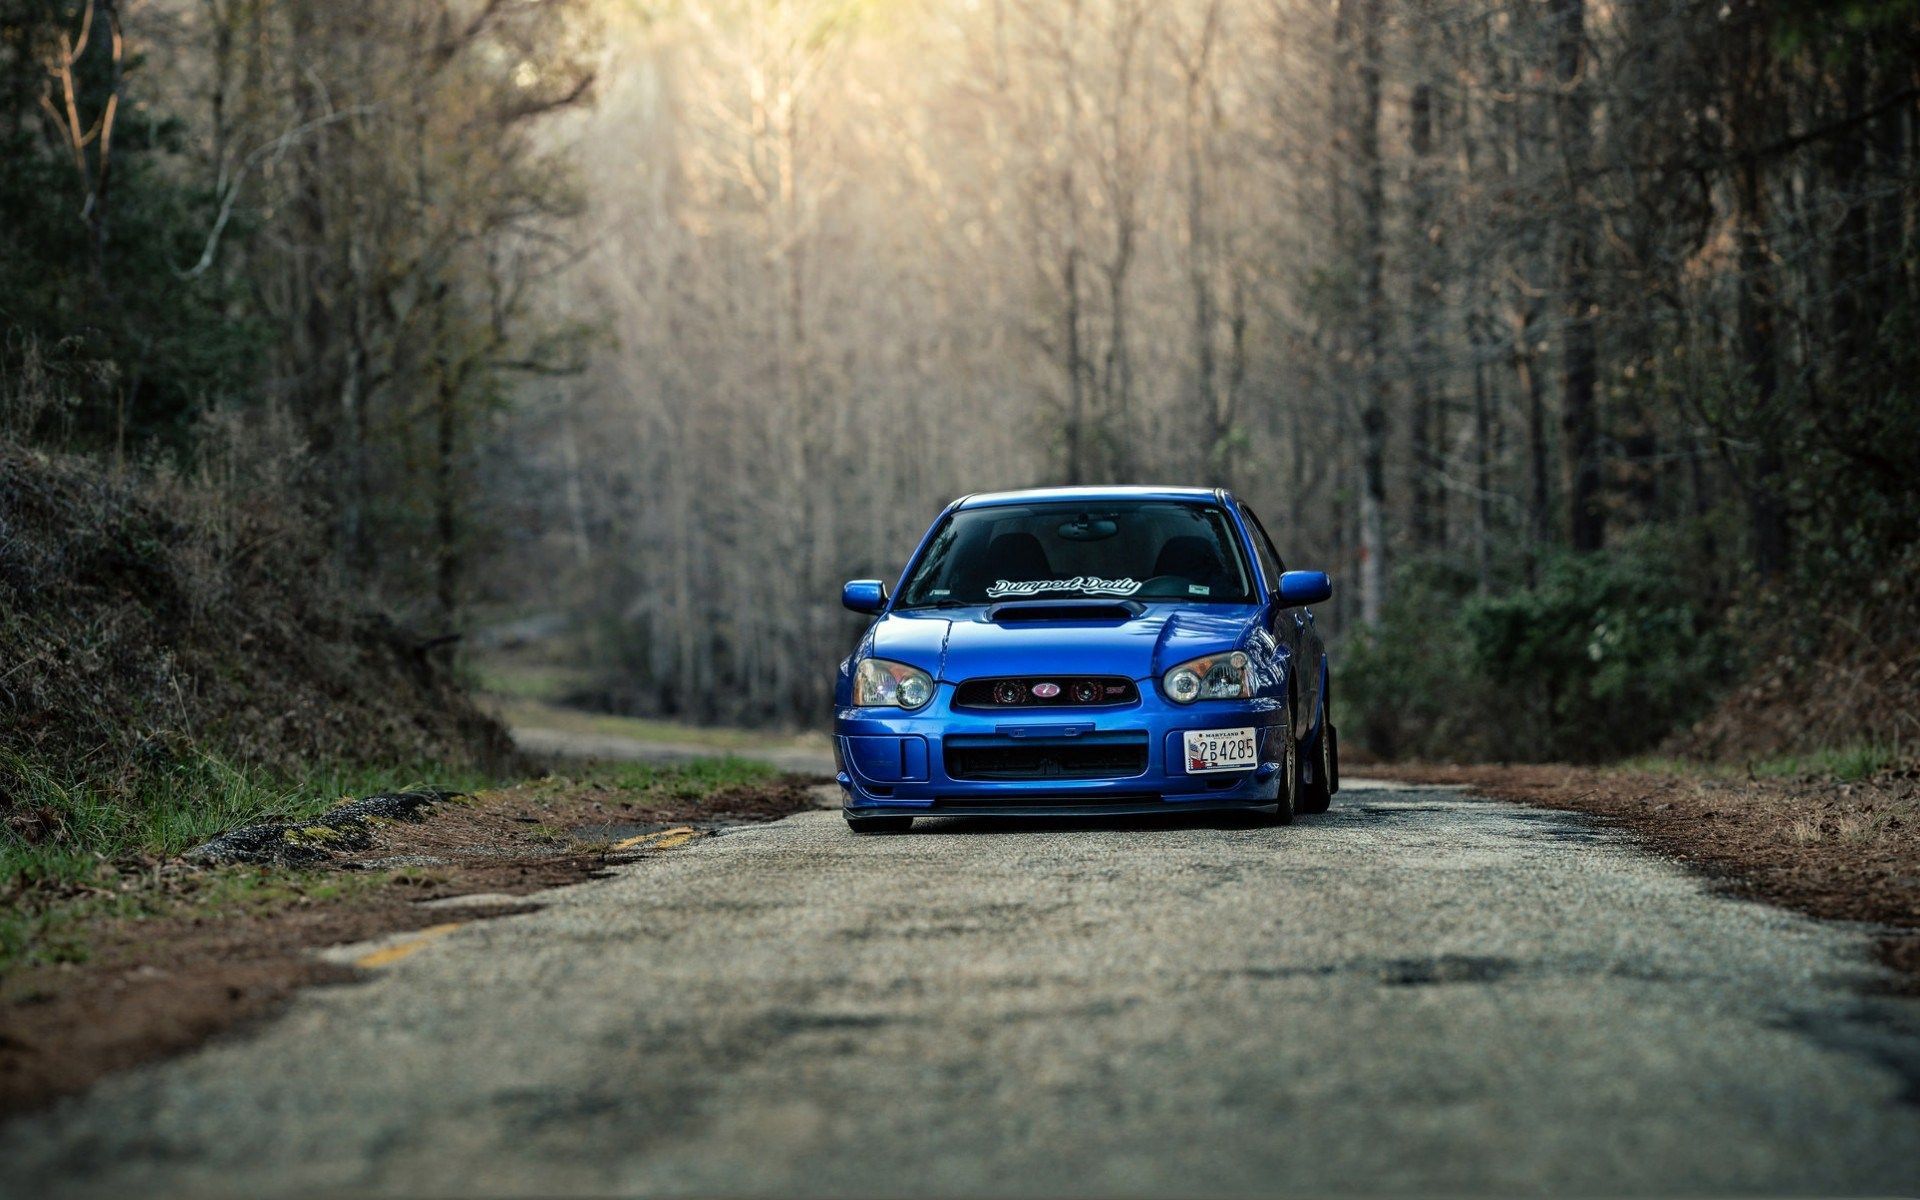 Subaru Impreza WRX on a forest road